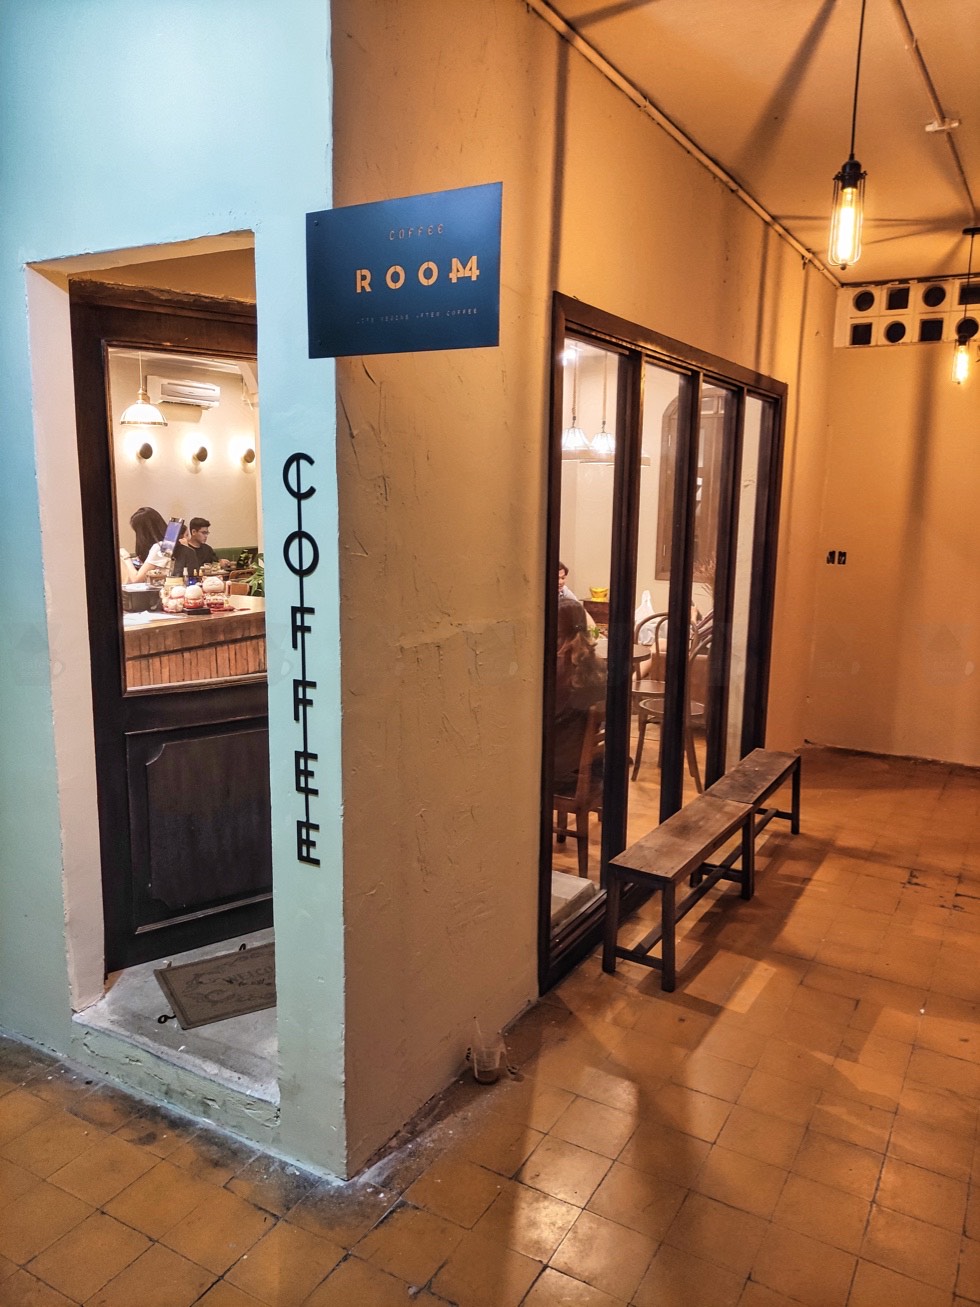 Room44 Caffe Entry